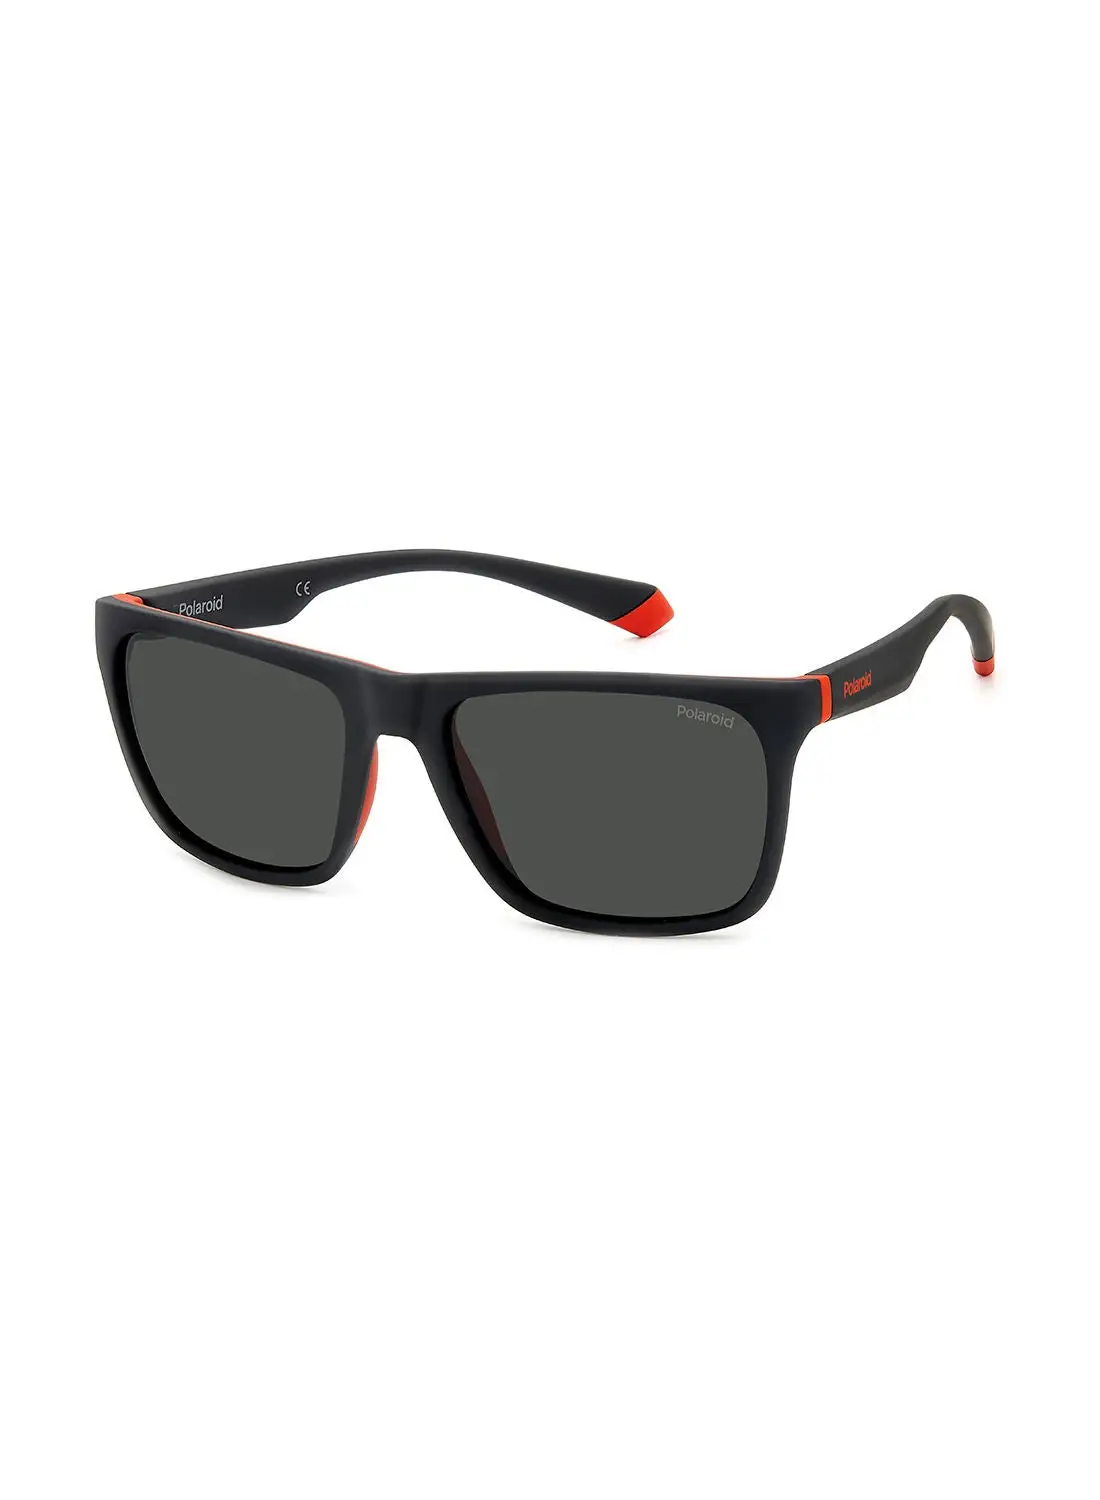 Polaroid Unisex UV Protection Square Sunglasses - Pld 2141/S Mt Blk Rd 57 - Lens Size: 57 Mm